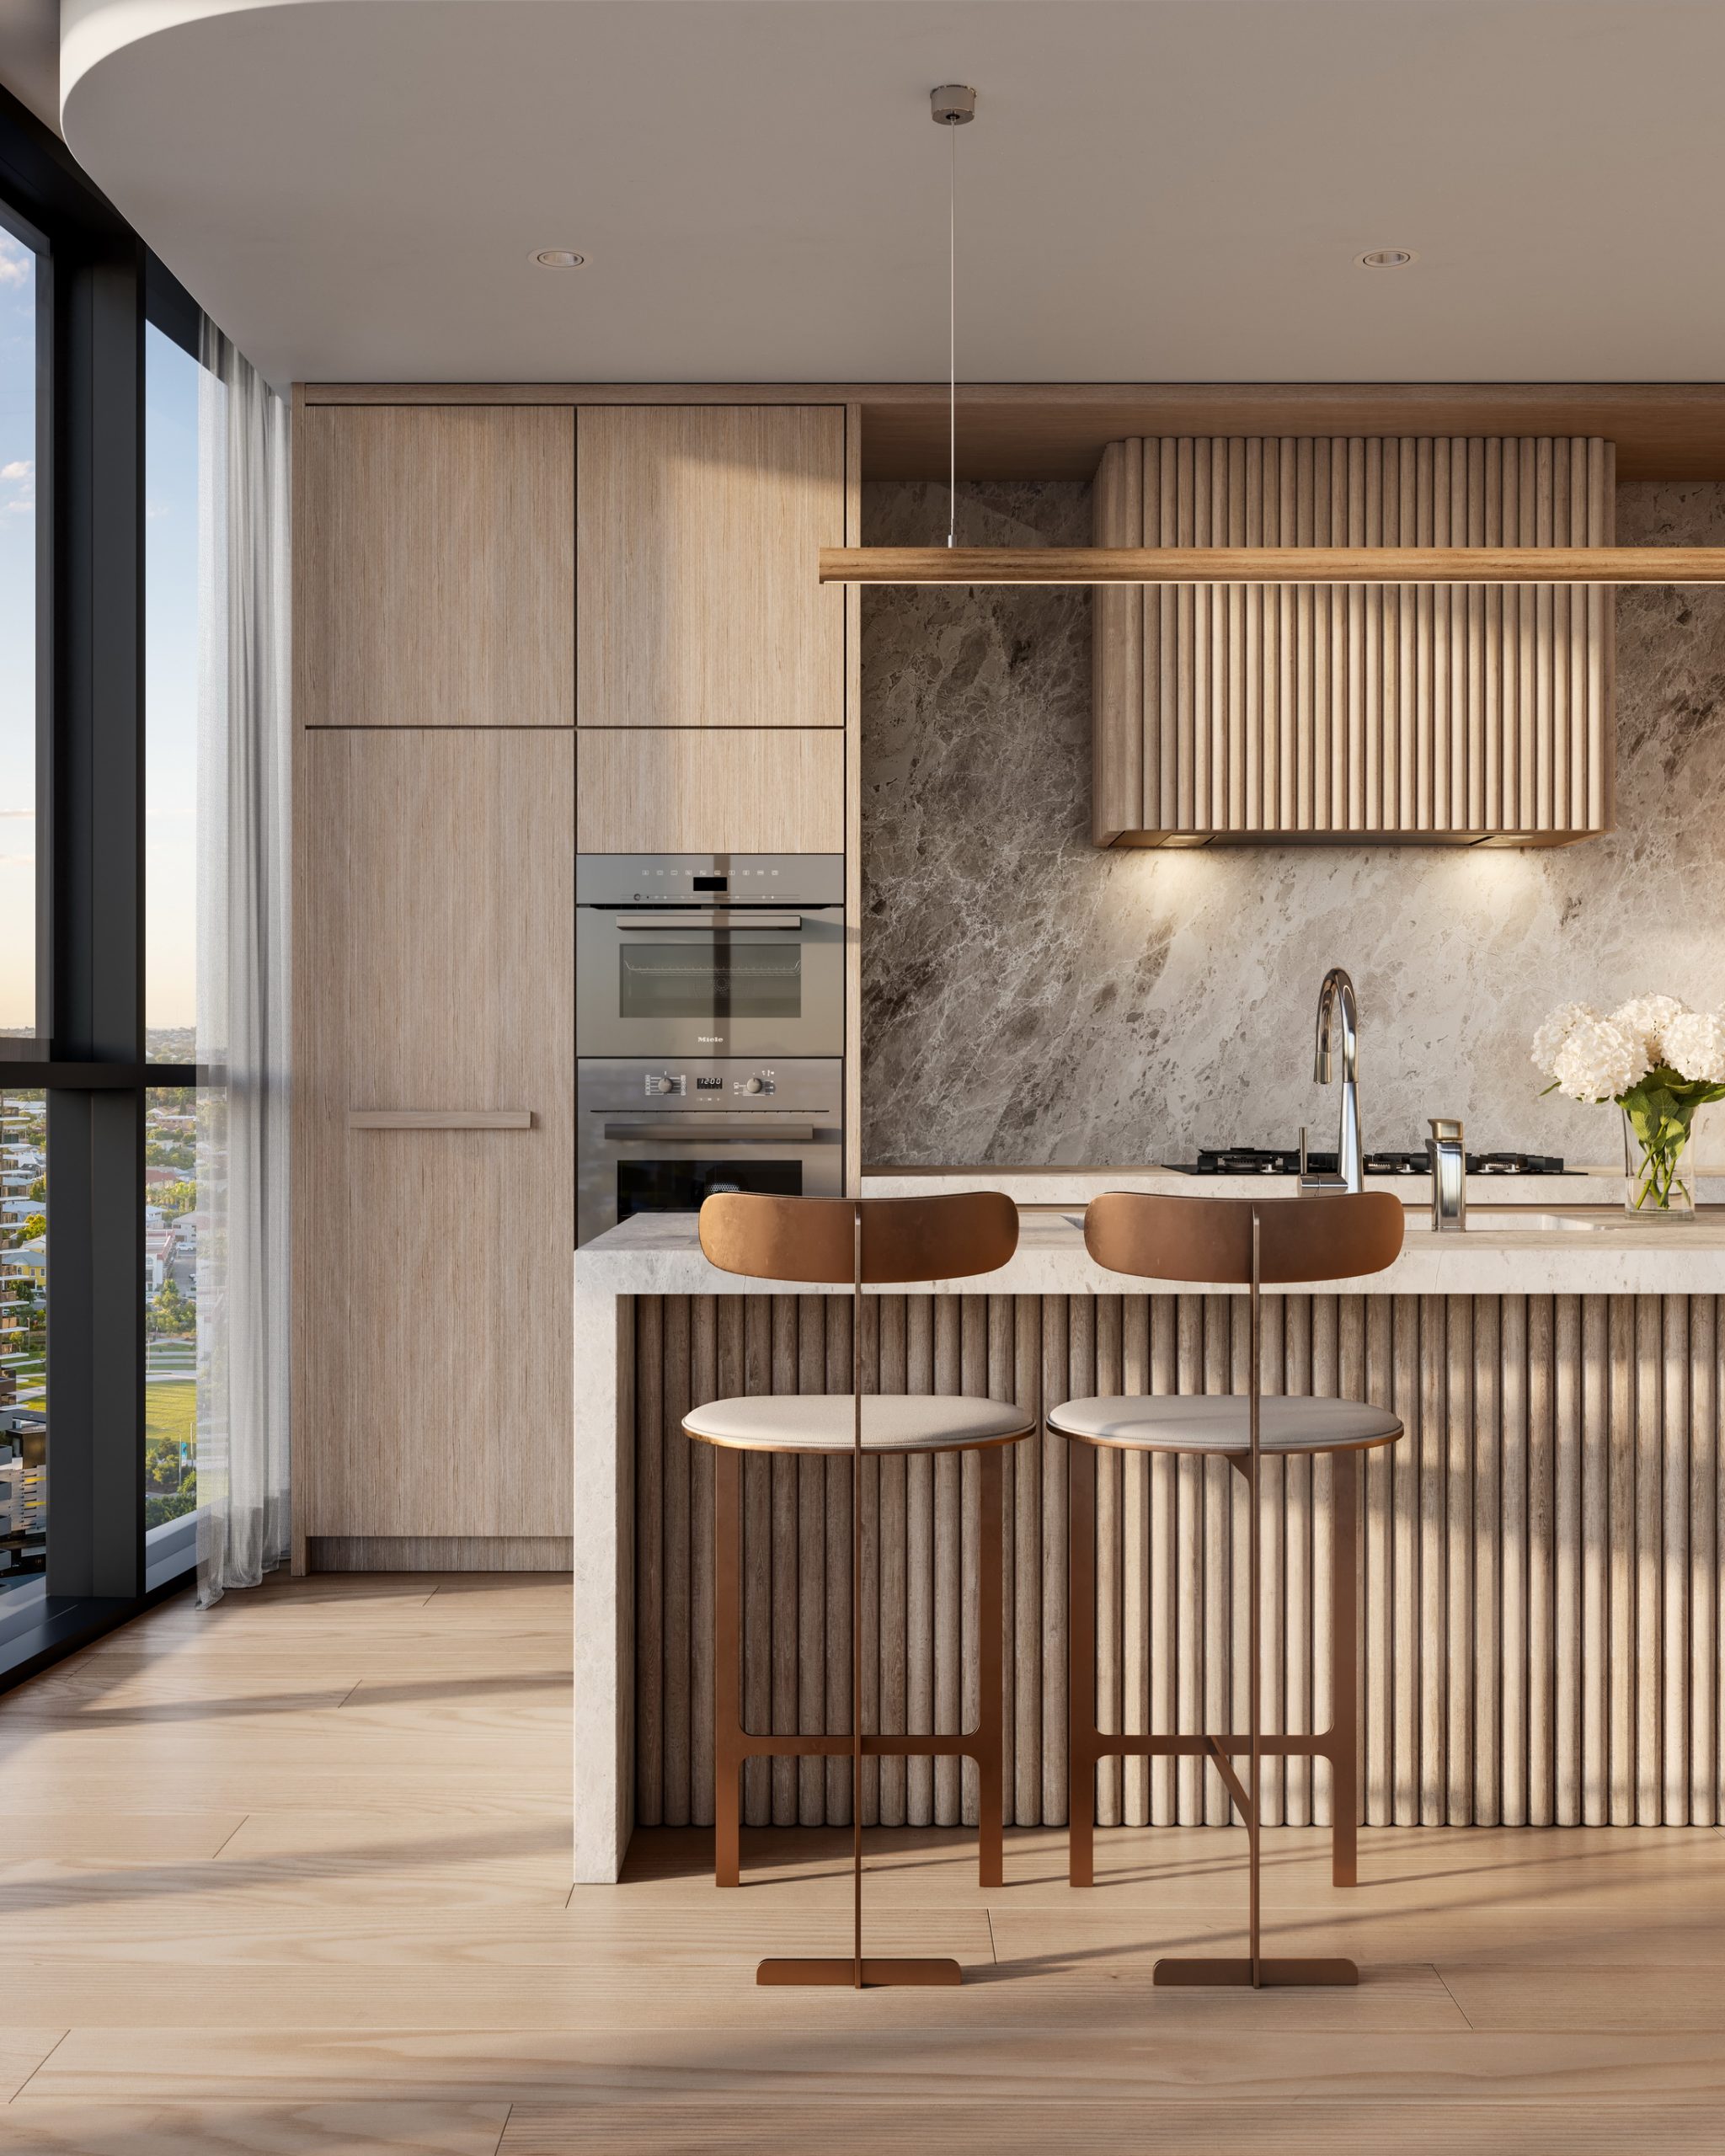 Rivello-queensland-render-3d-fkd-studio-architecture-luxury-interior-design-kitchen-penthouse